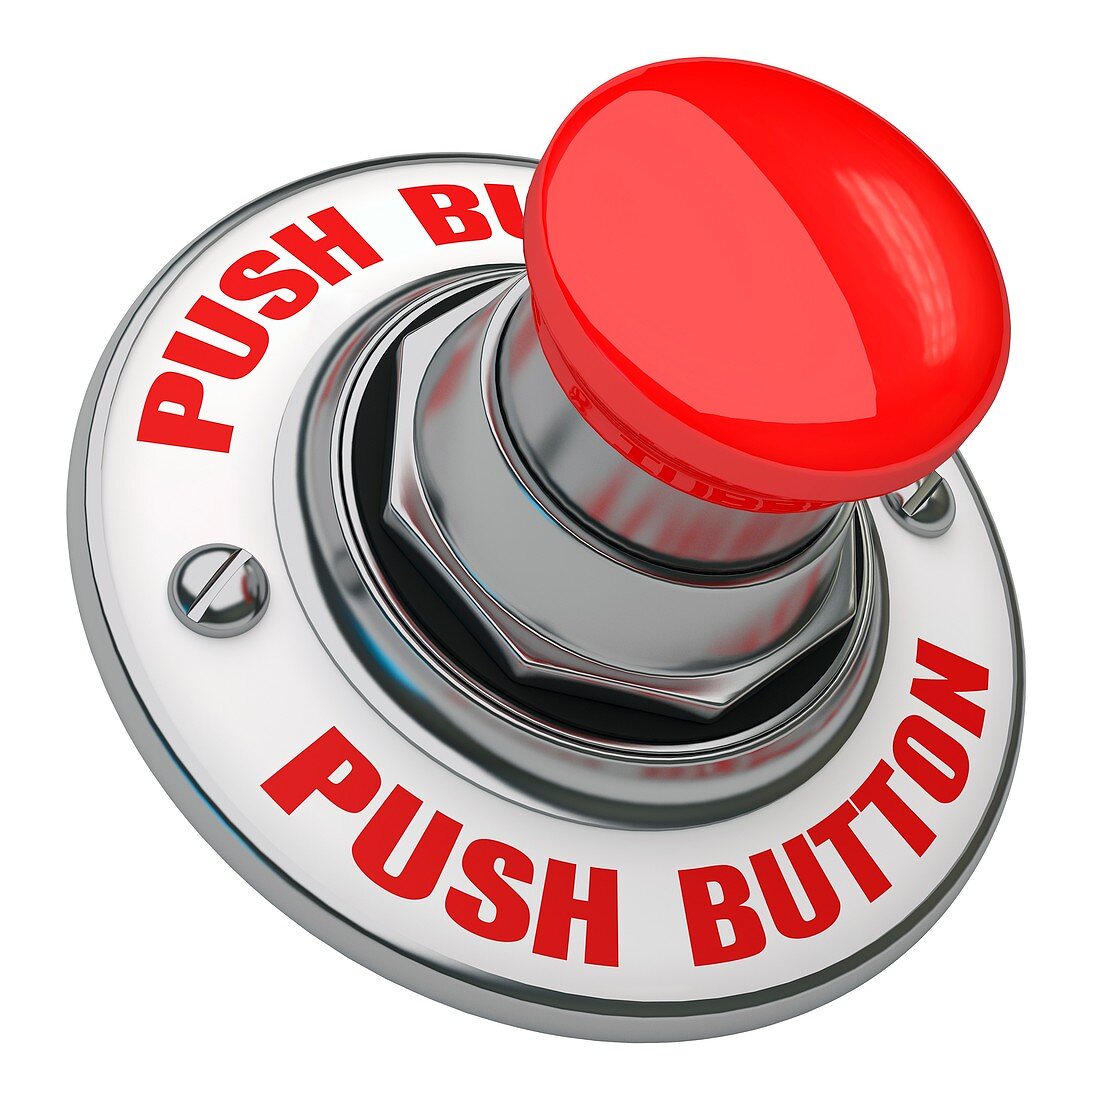 Push button,artwork